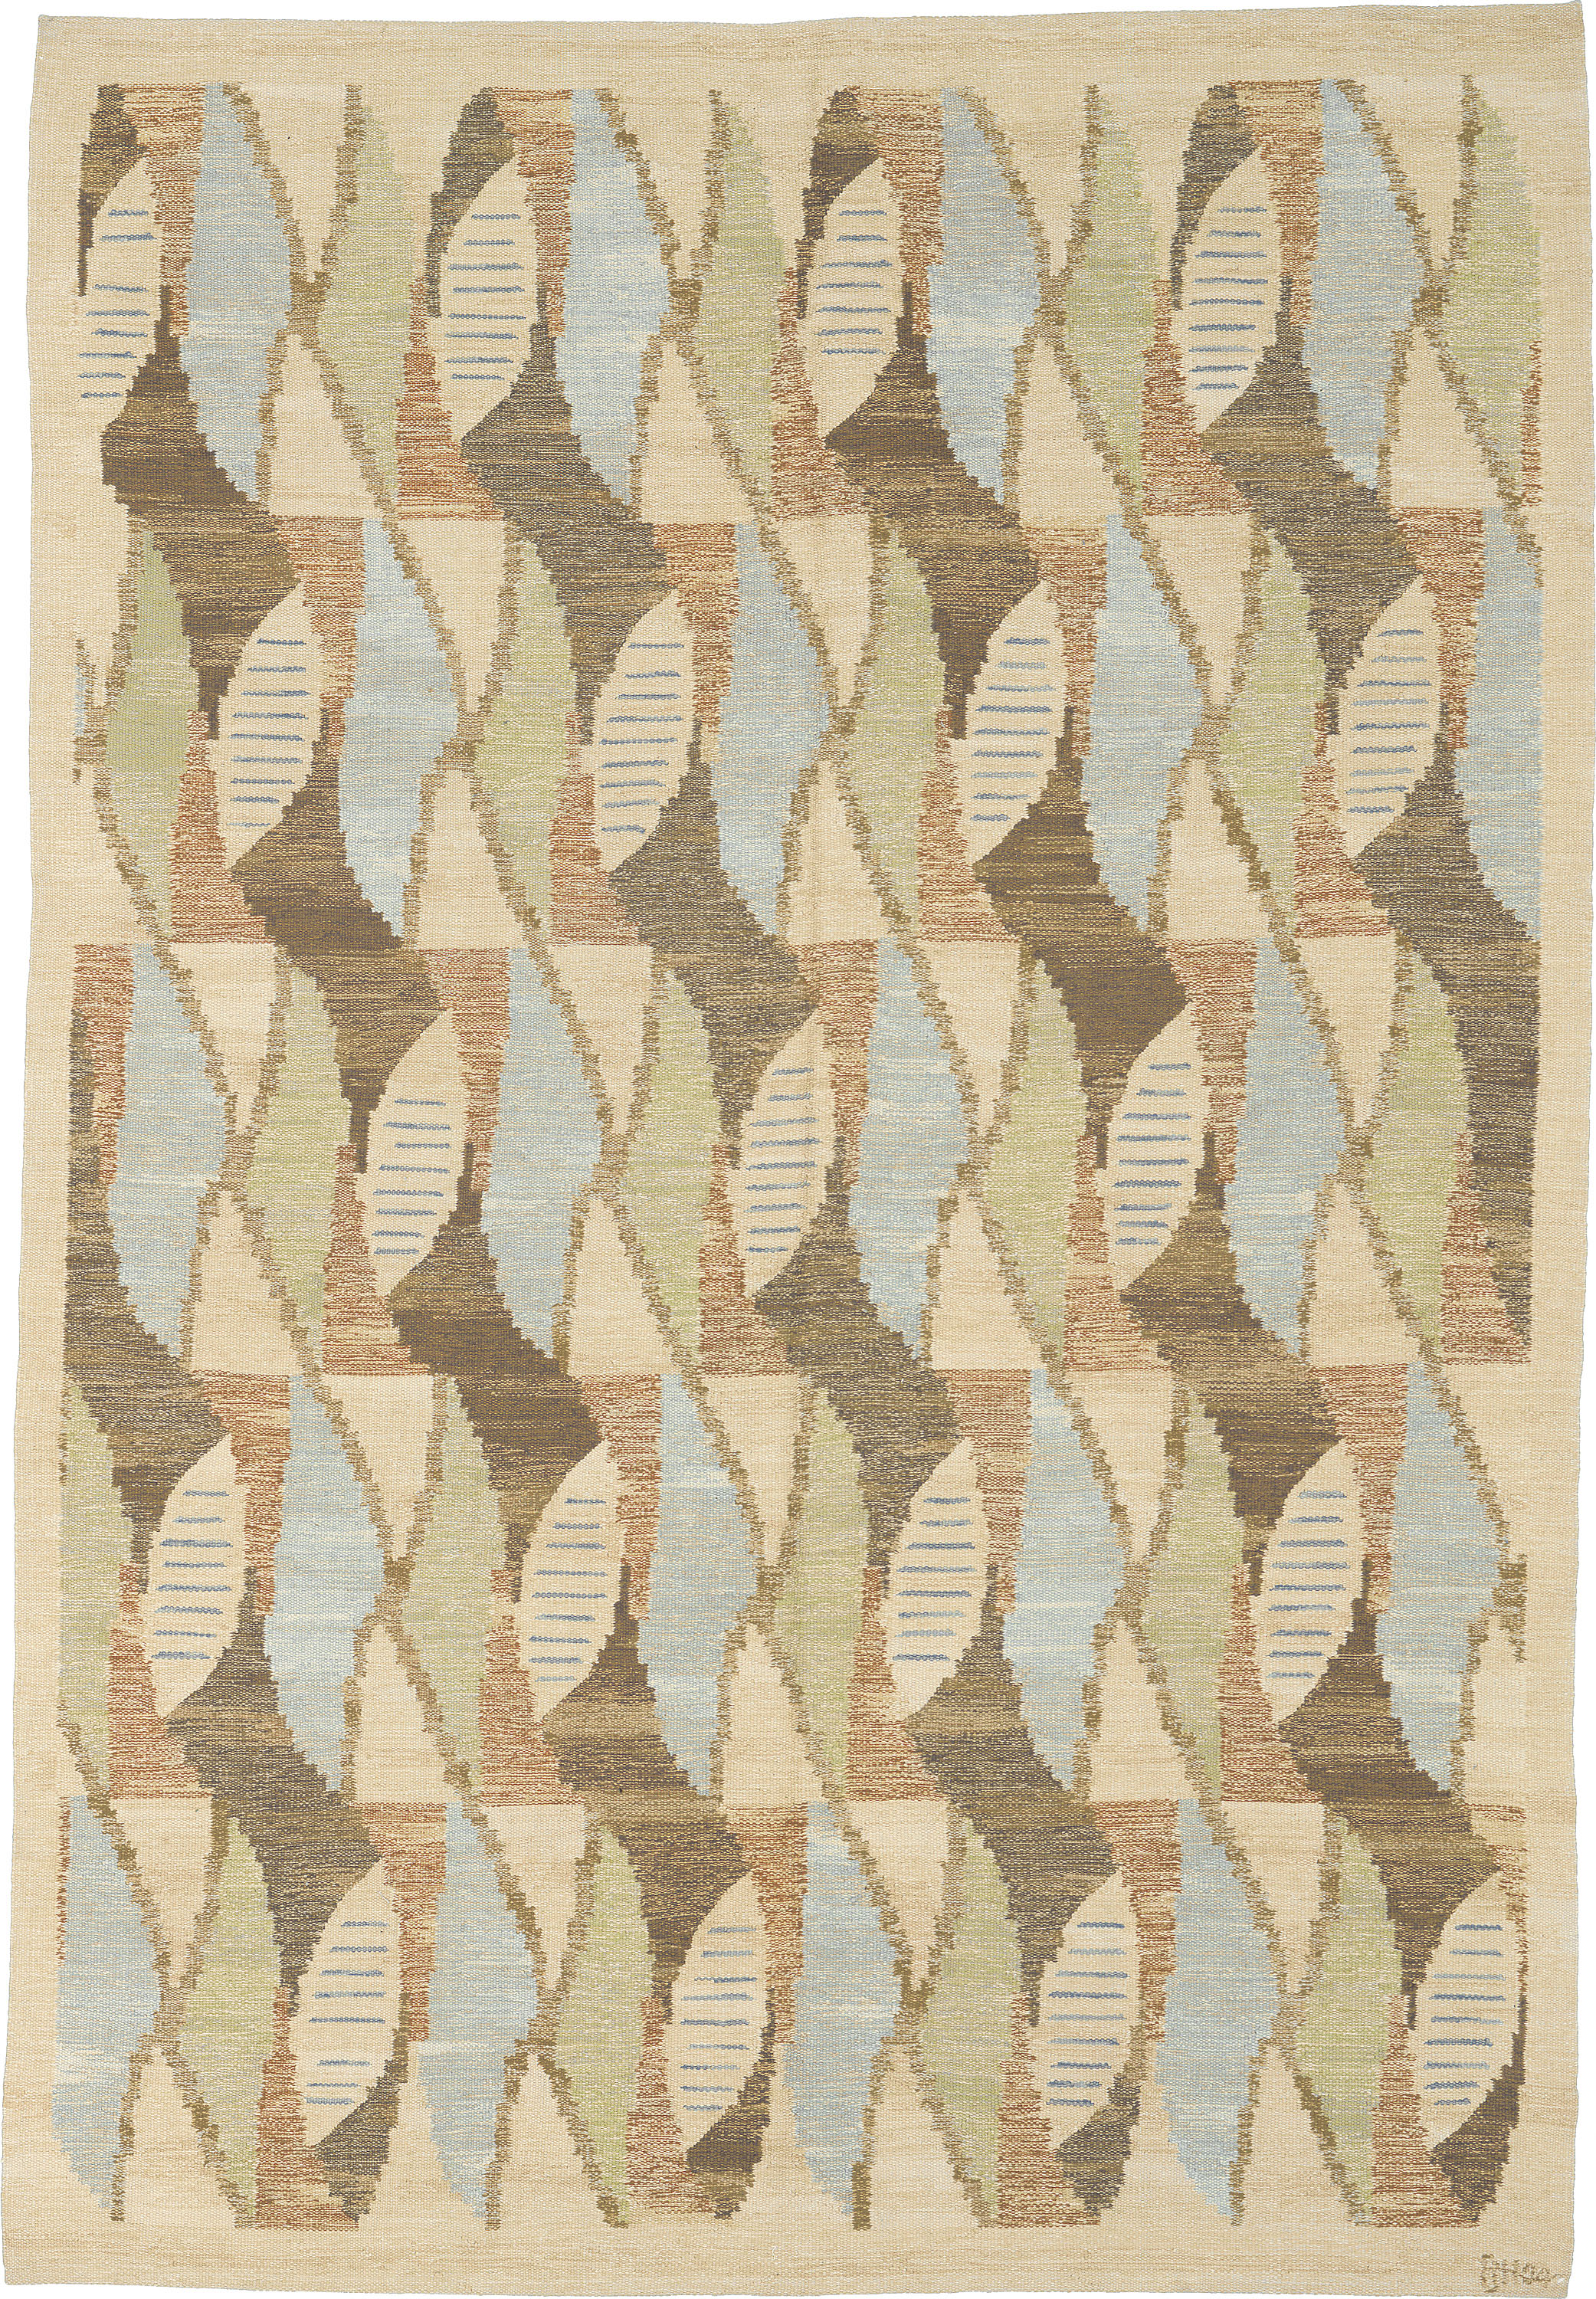 Brita Design | Custom Swedish Flat Weave Carpet | FJ Hakimian | Carpet Gallery in NY